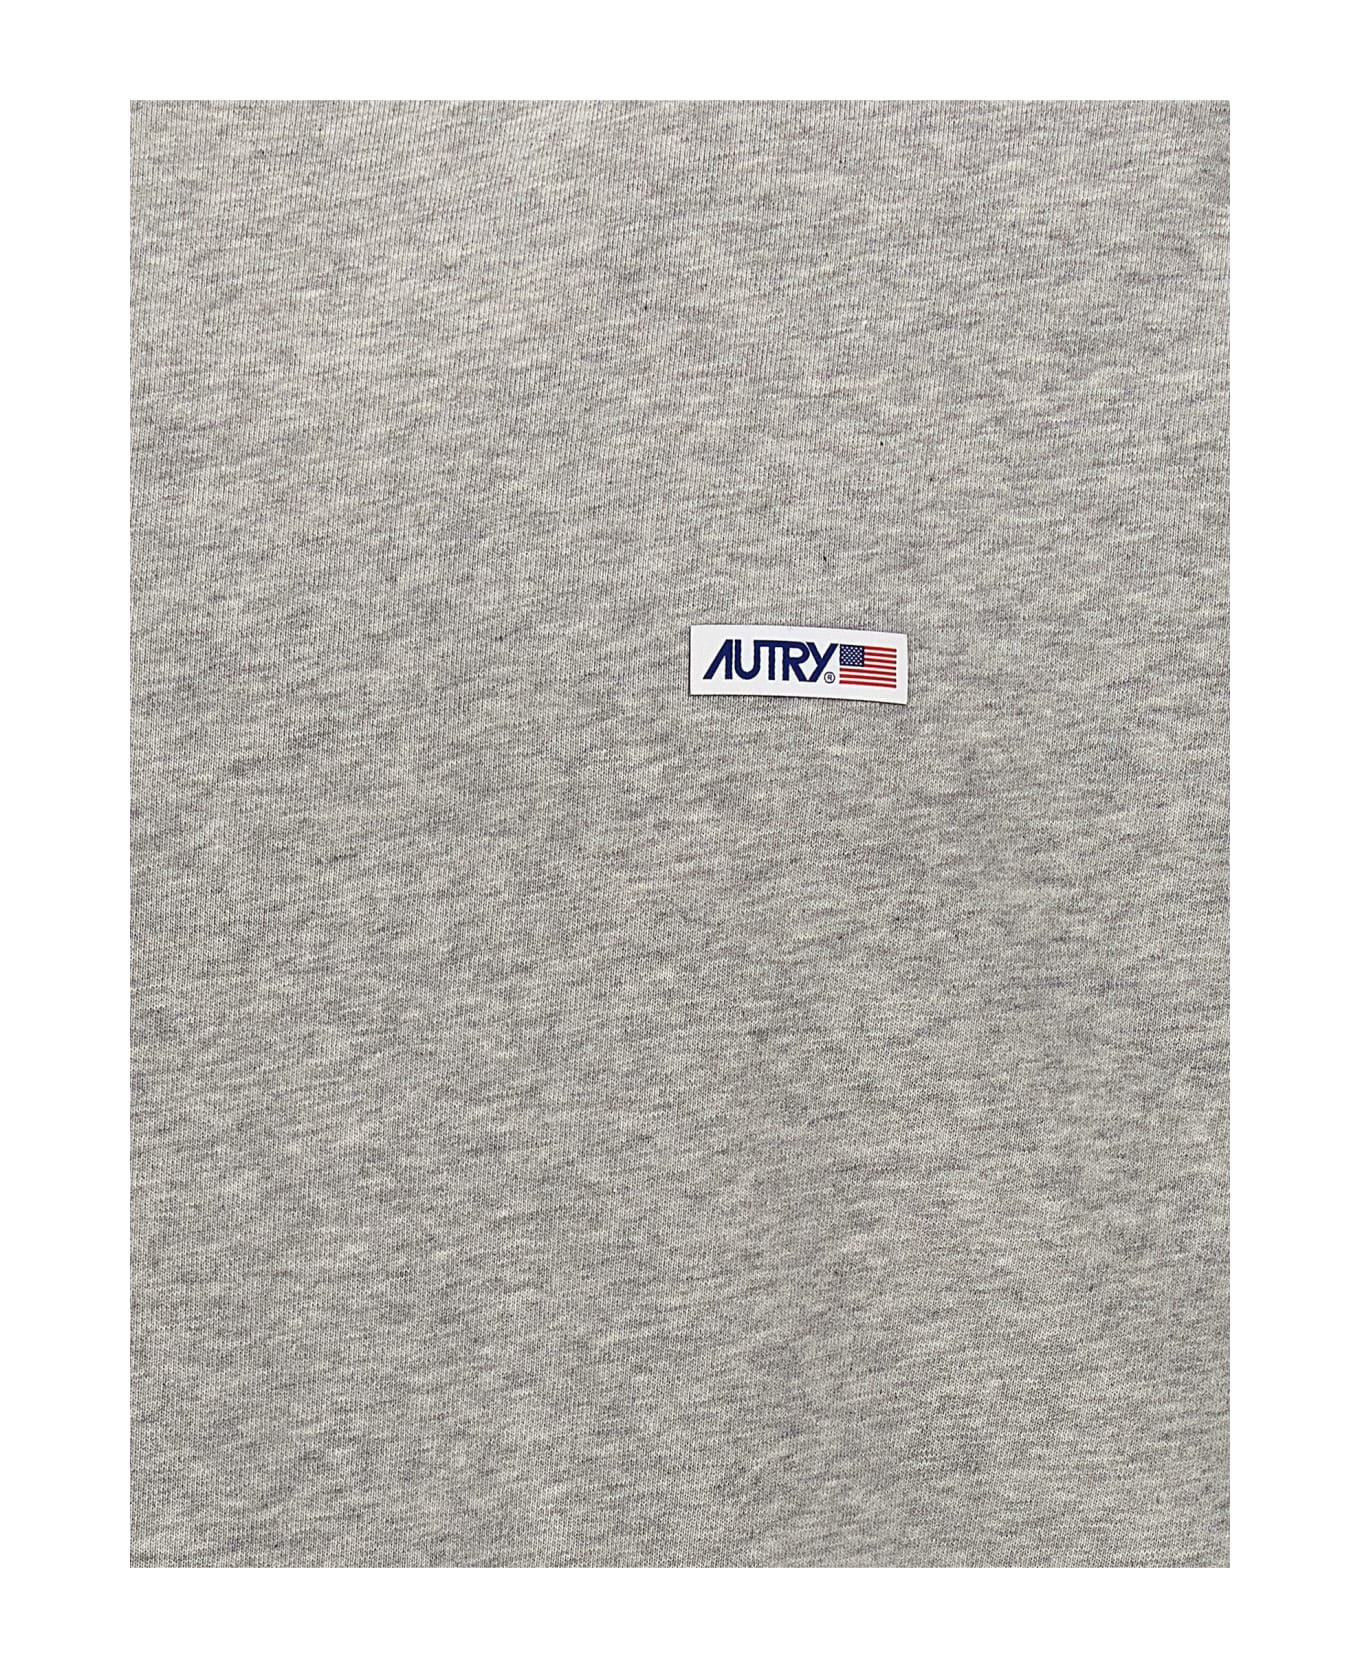 Autry Logo Sweatshirt - Gray